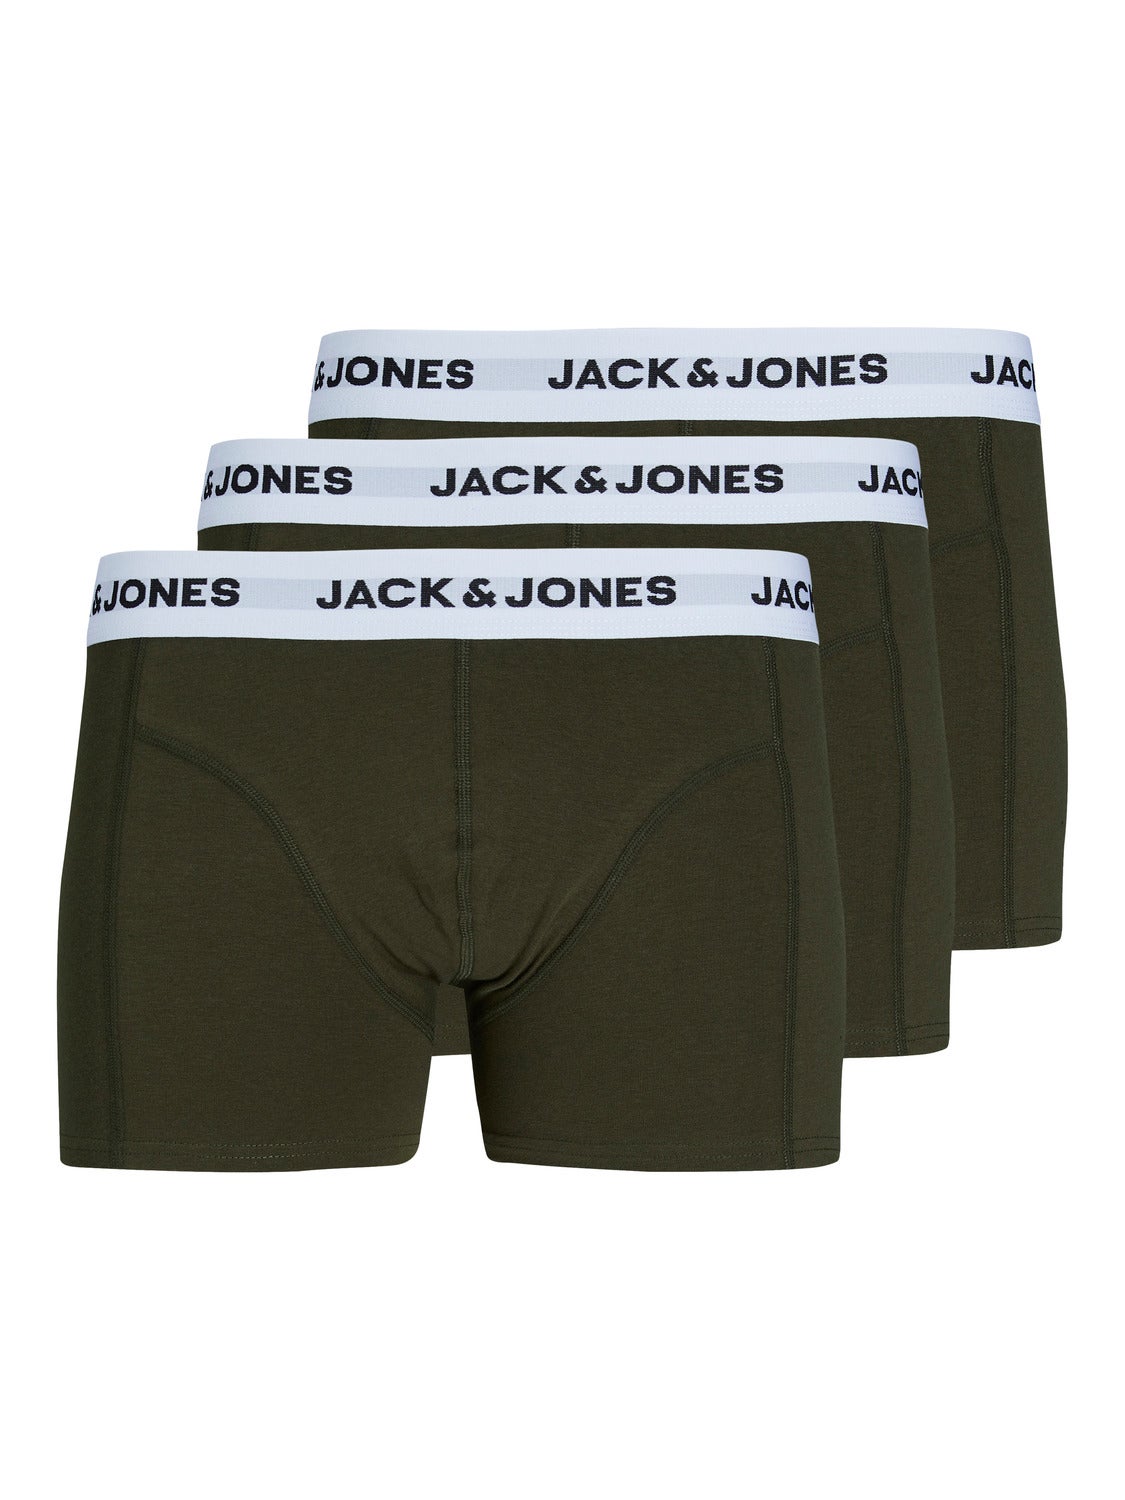 Jack & Jones Underpant MEN FASHION Underwear & Nightwear discount 57% Navy Blue/Red L 